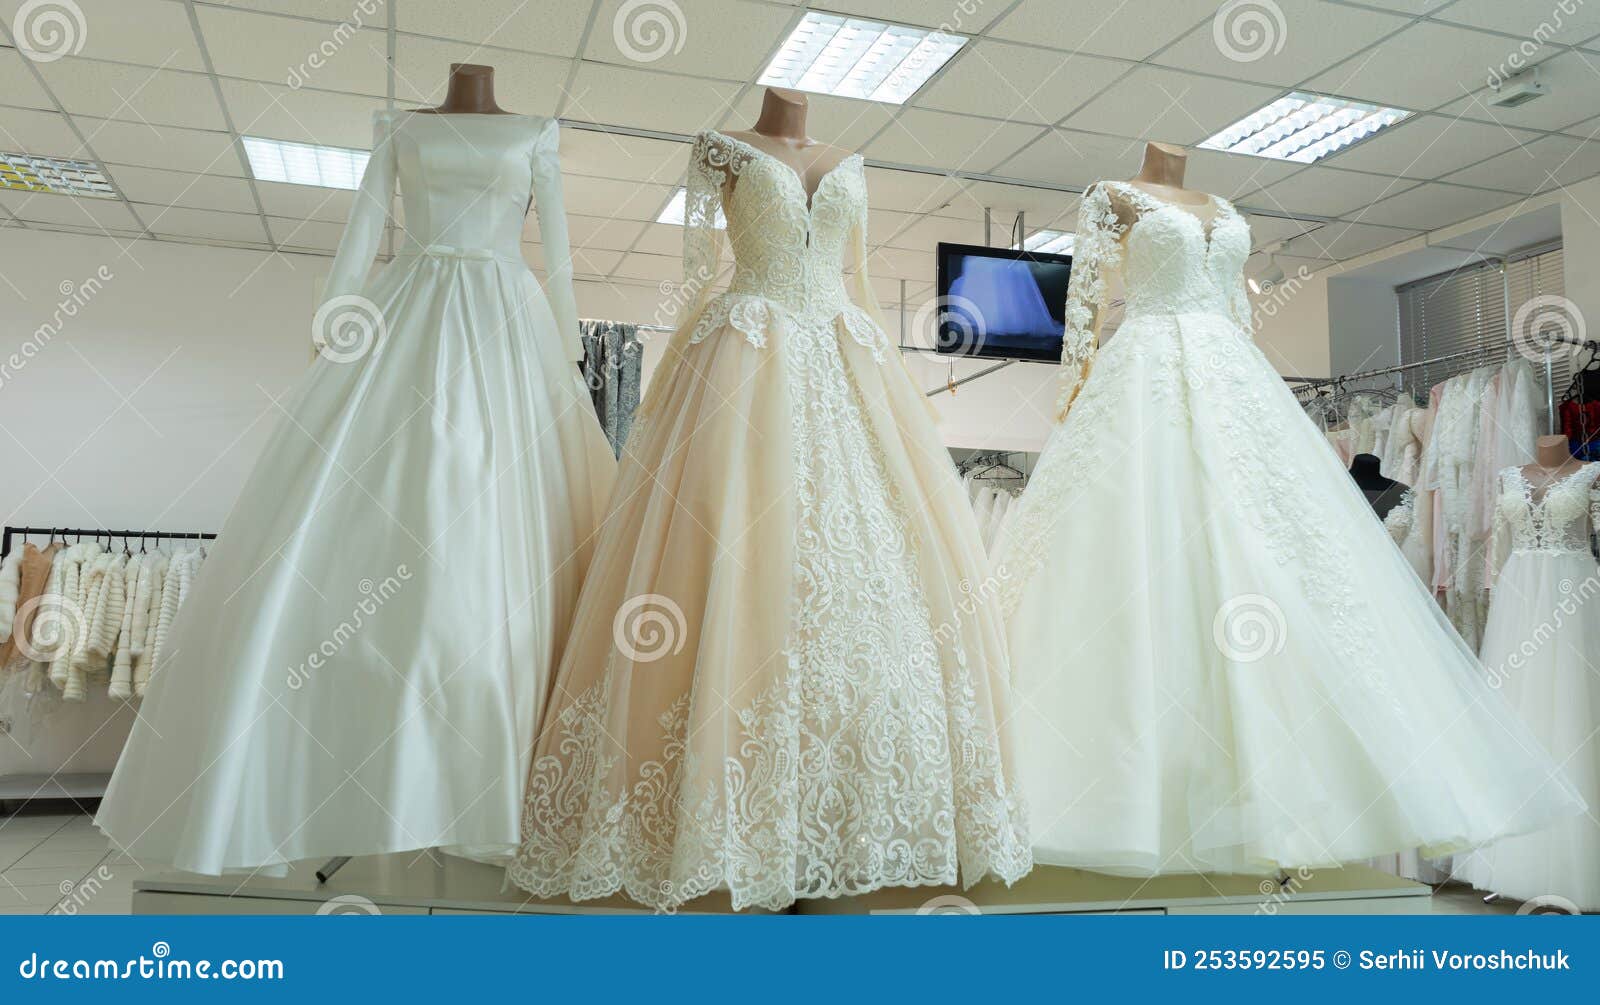 40 Beautiful Halterneck Wedding Dresses - hitched.co.uk - hitched.co.uk